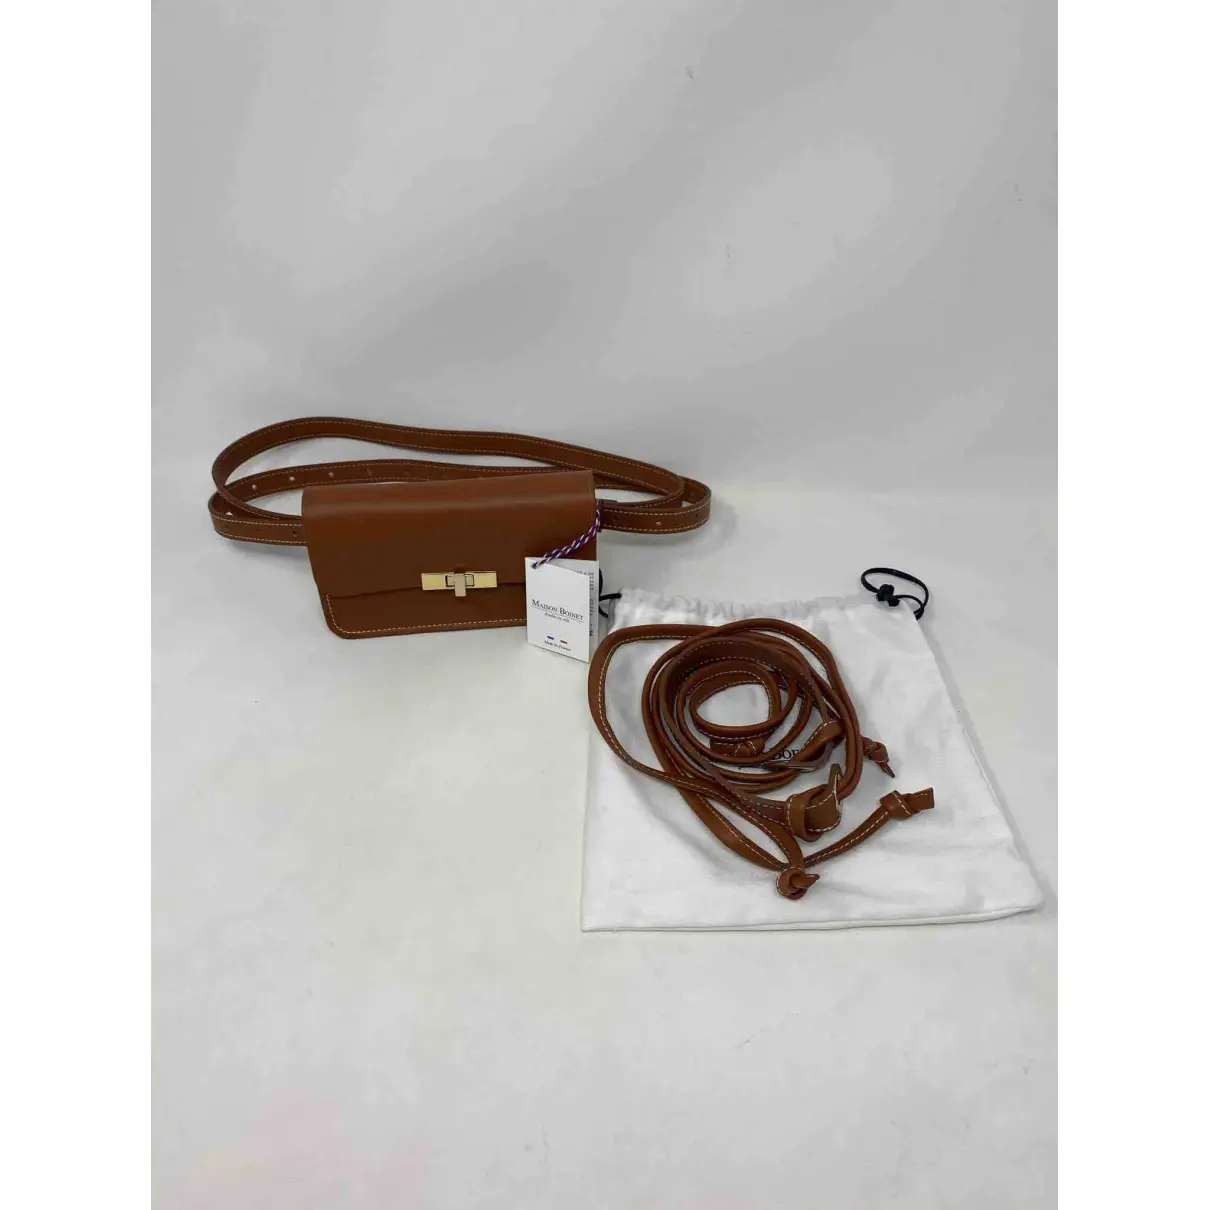 Buy Maison Boinet Leather clutch bag online